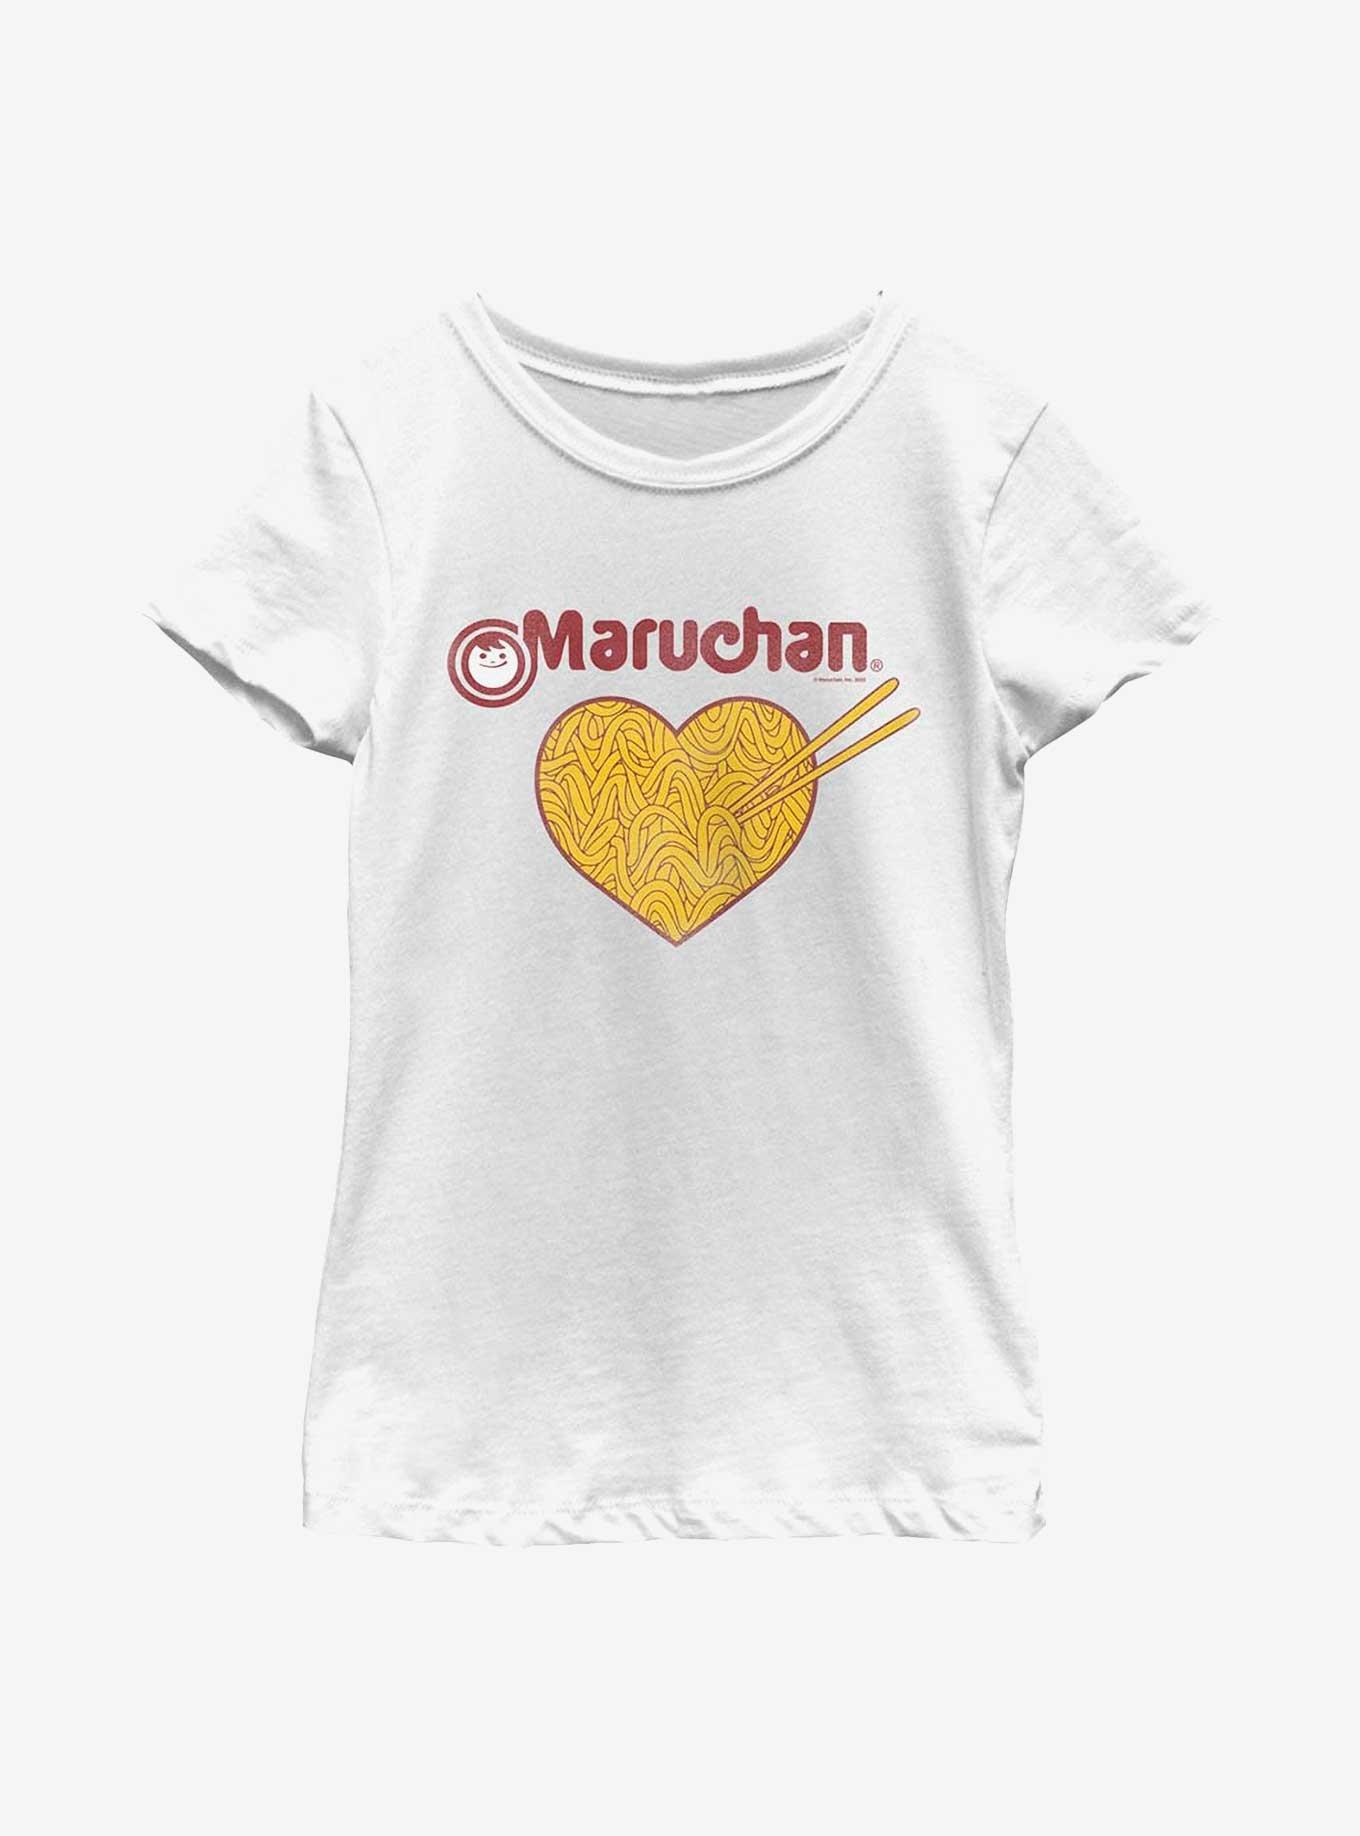 Maruchan Noodles Heart Youth Girls T-Shirt, , hi-res